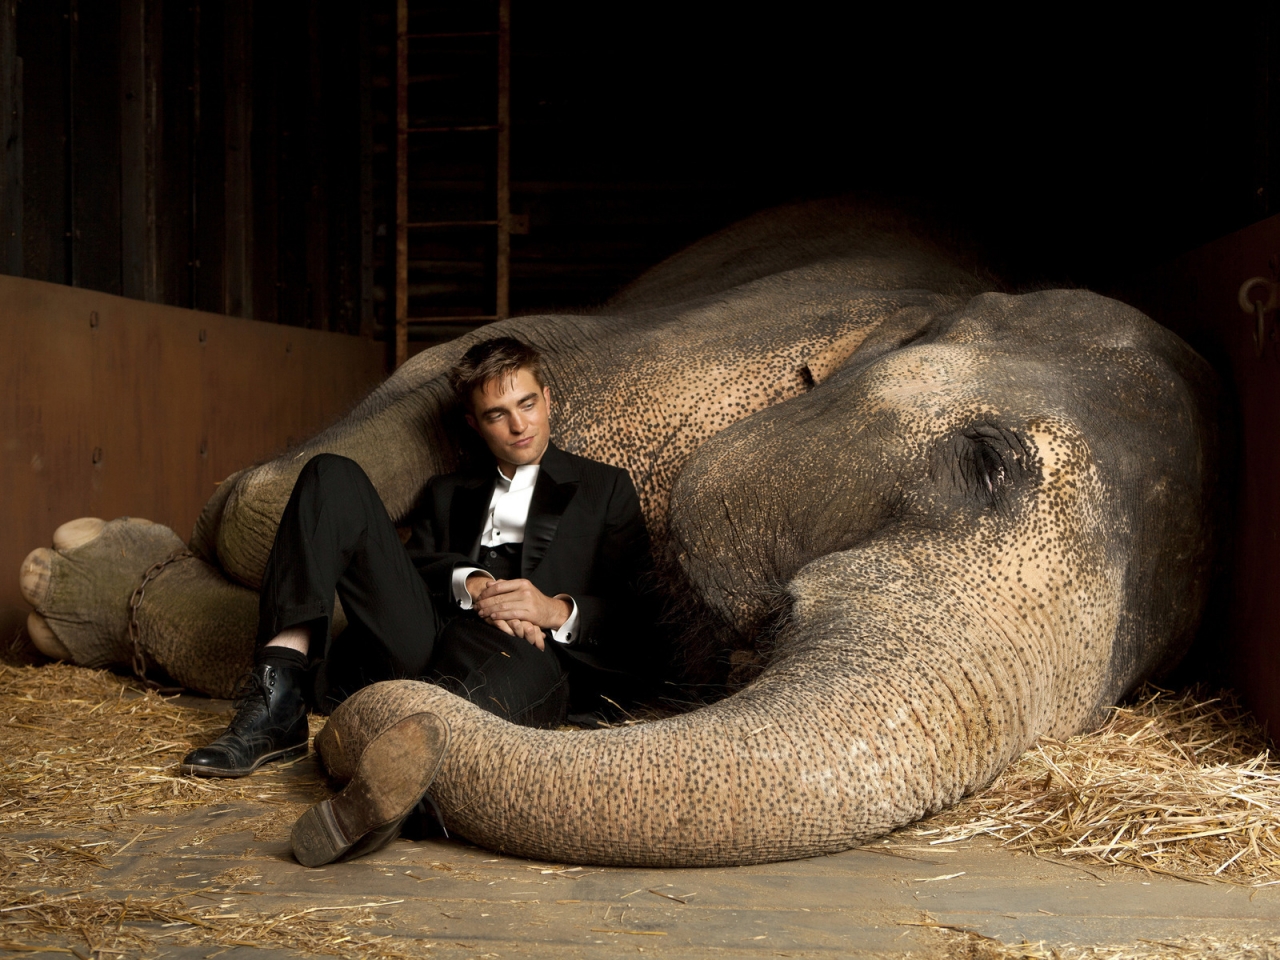 Robert Pattinson Close to Elephant for 1280 x 960 resolution